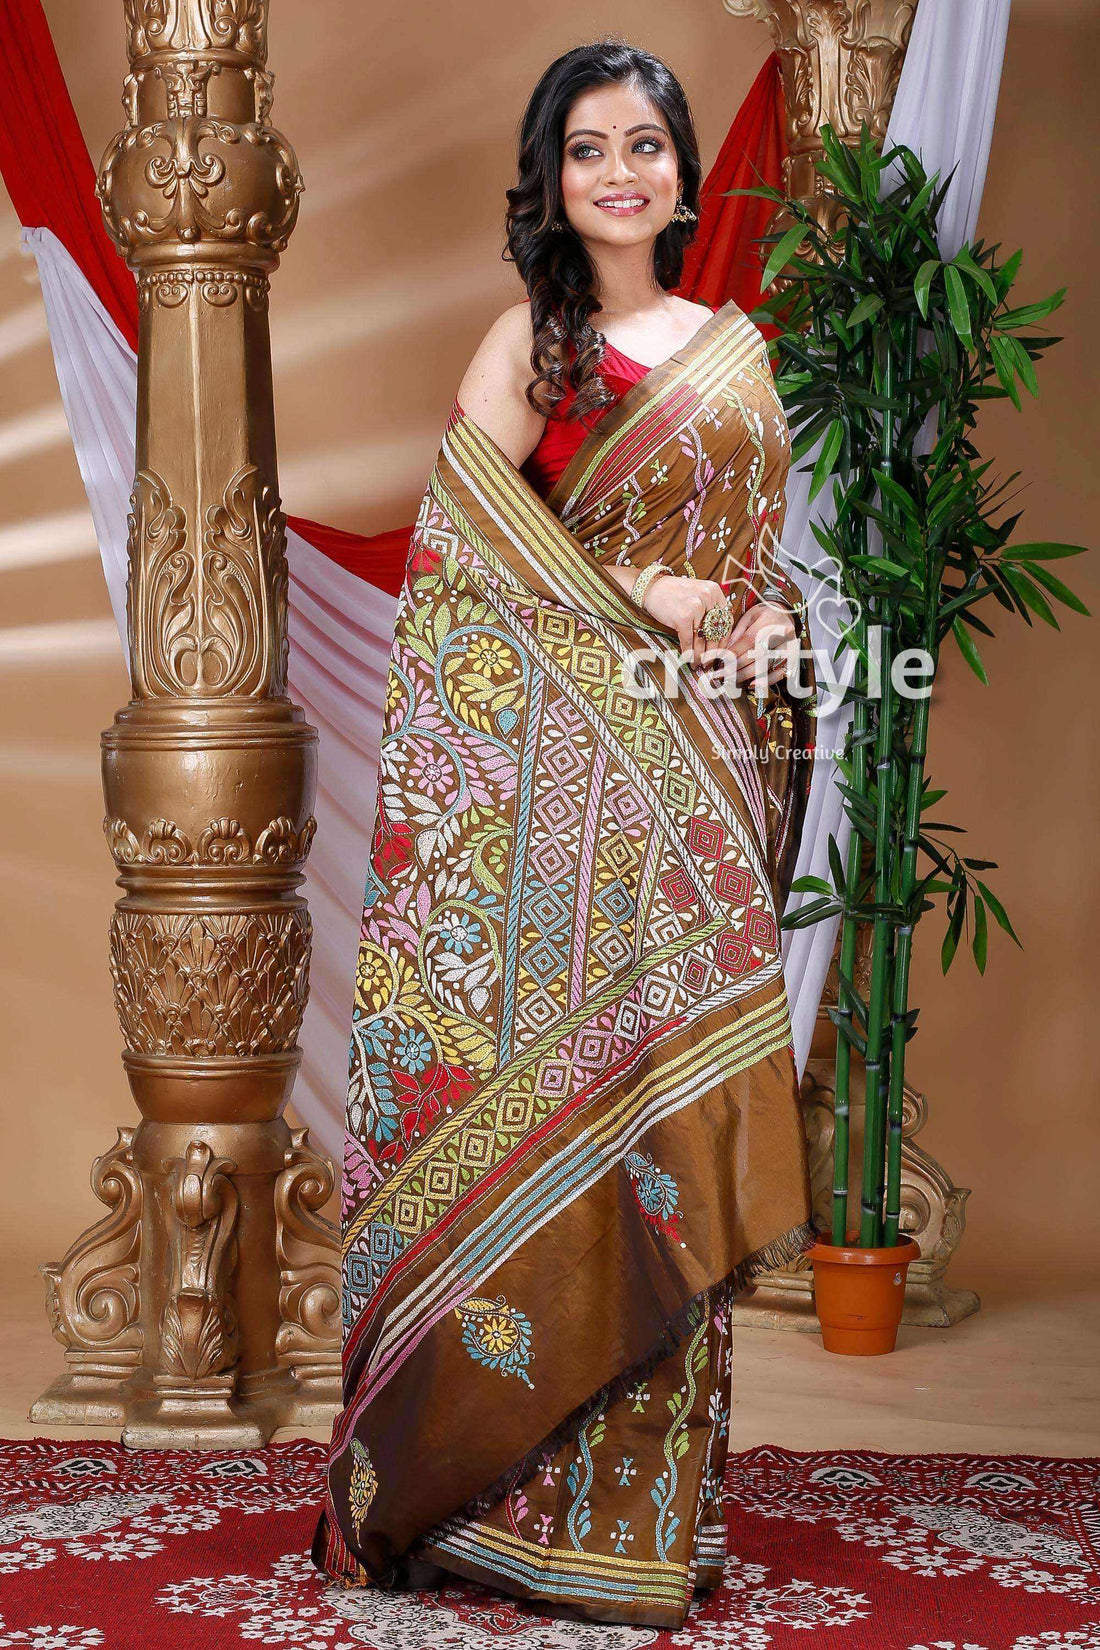 Caramel Brown Exquisite Silk Kantha Embroidery Saree-Craftyle